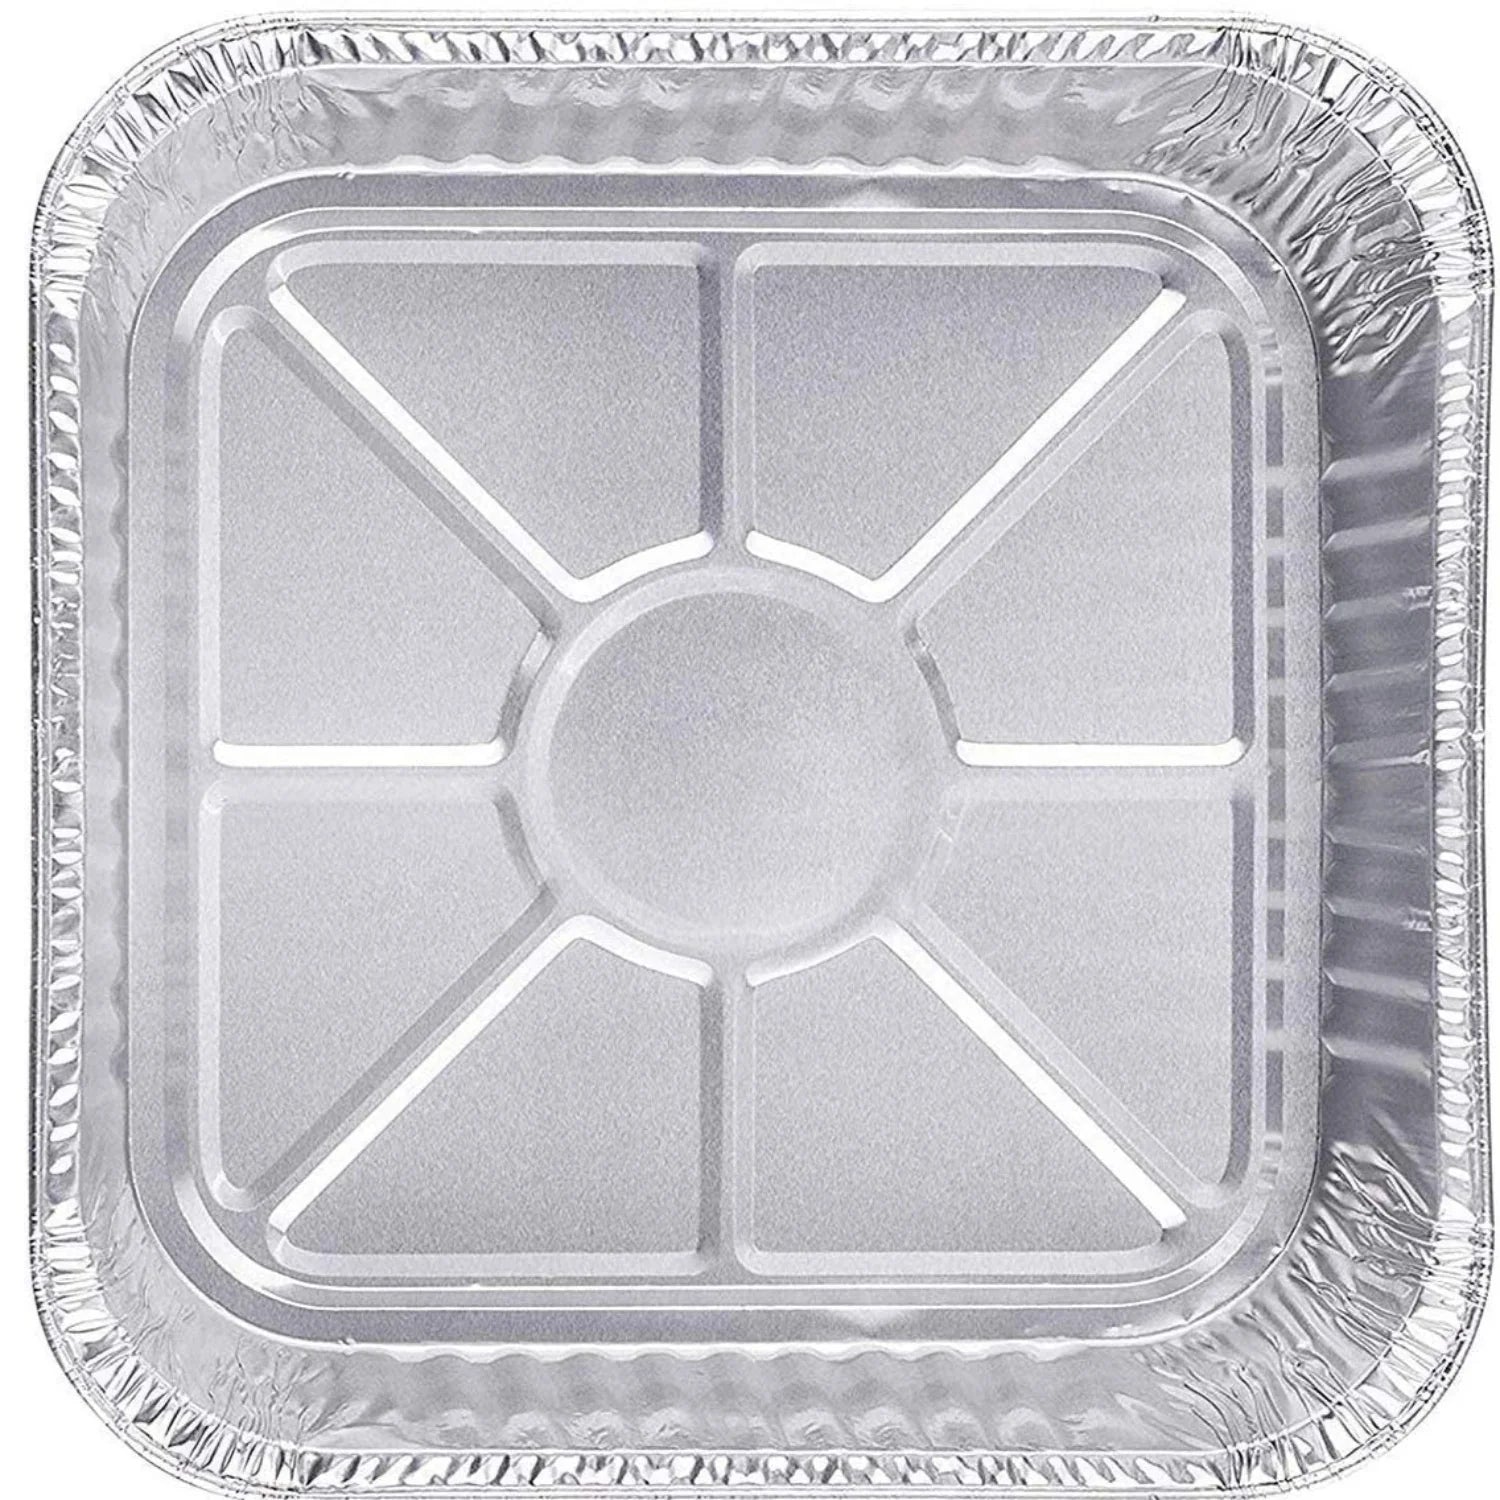 *WHOLESALE* Disposable Aluminum 8" Square Cake Baking Pan | 500 ct/case Disposable Nicole Fantini   